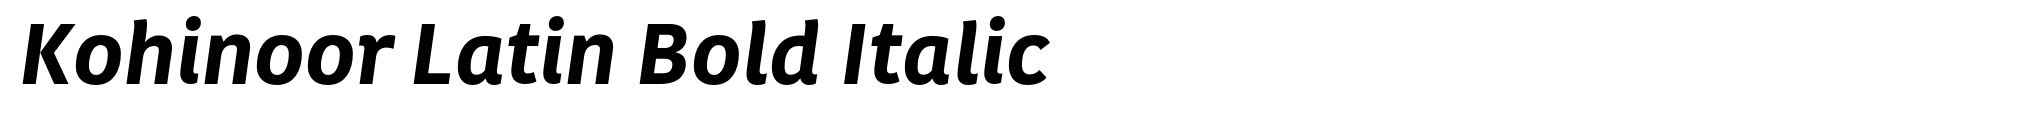 Kohinoor Latin Bold Italic image